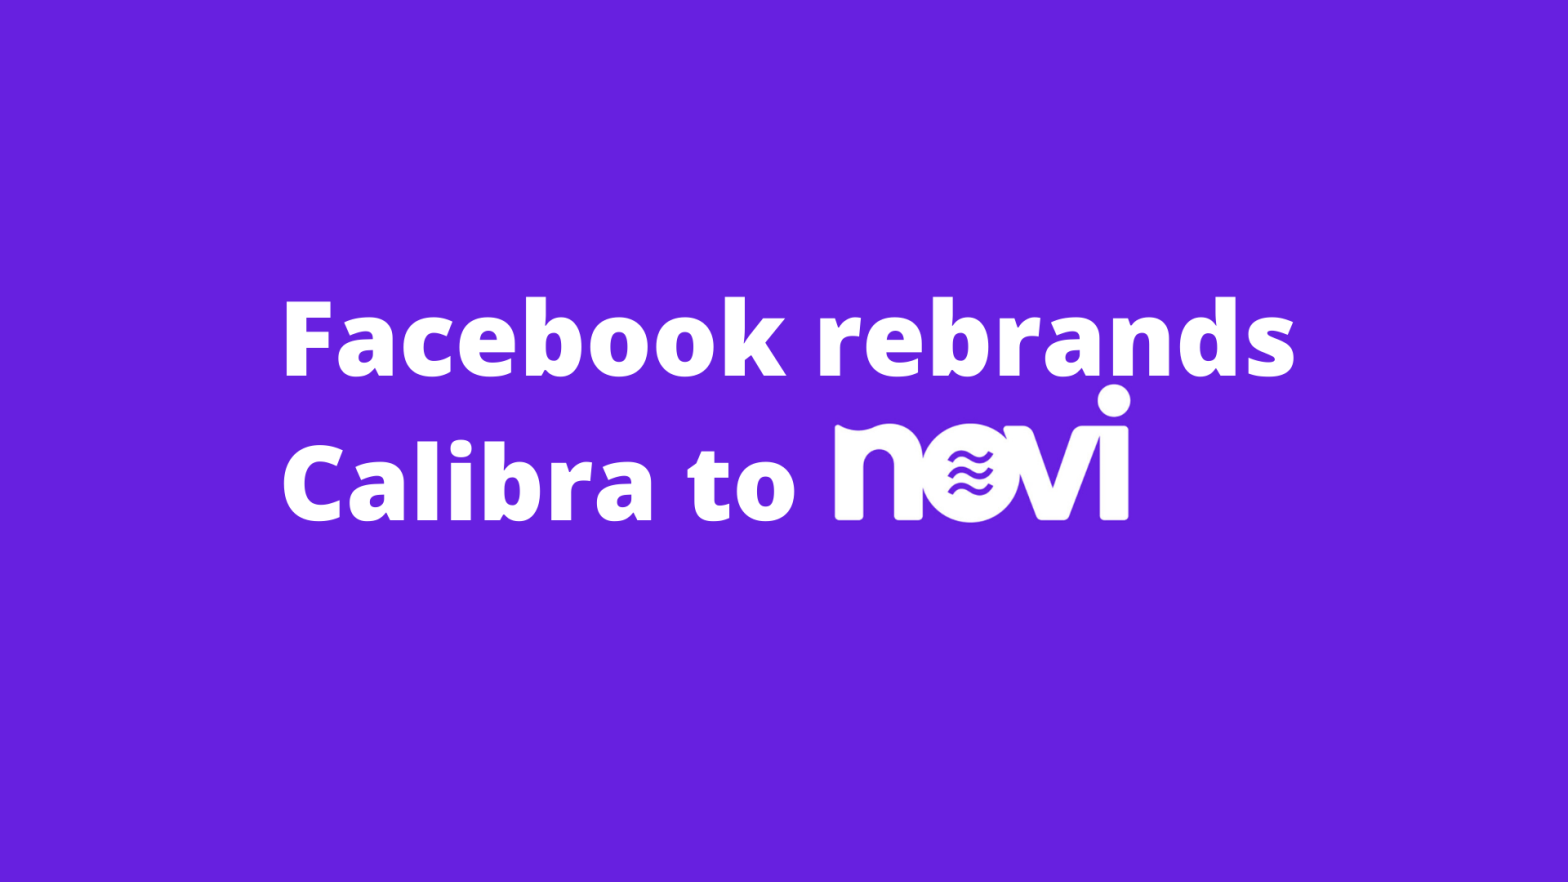  Facebook rebrands Calibra to Novi as the digital wallet for Libra cryptocurrency